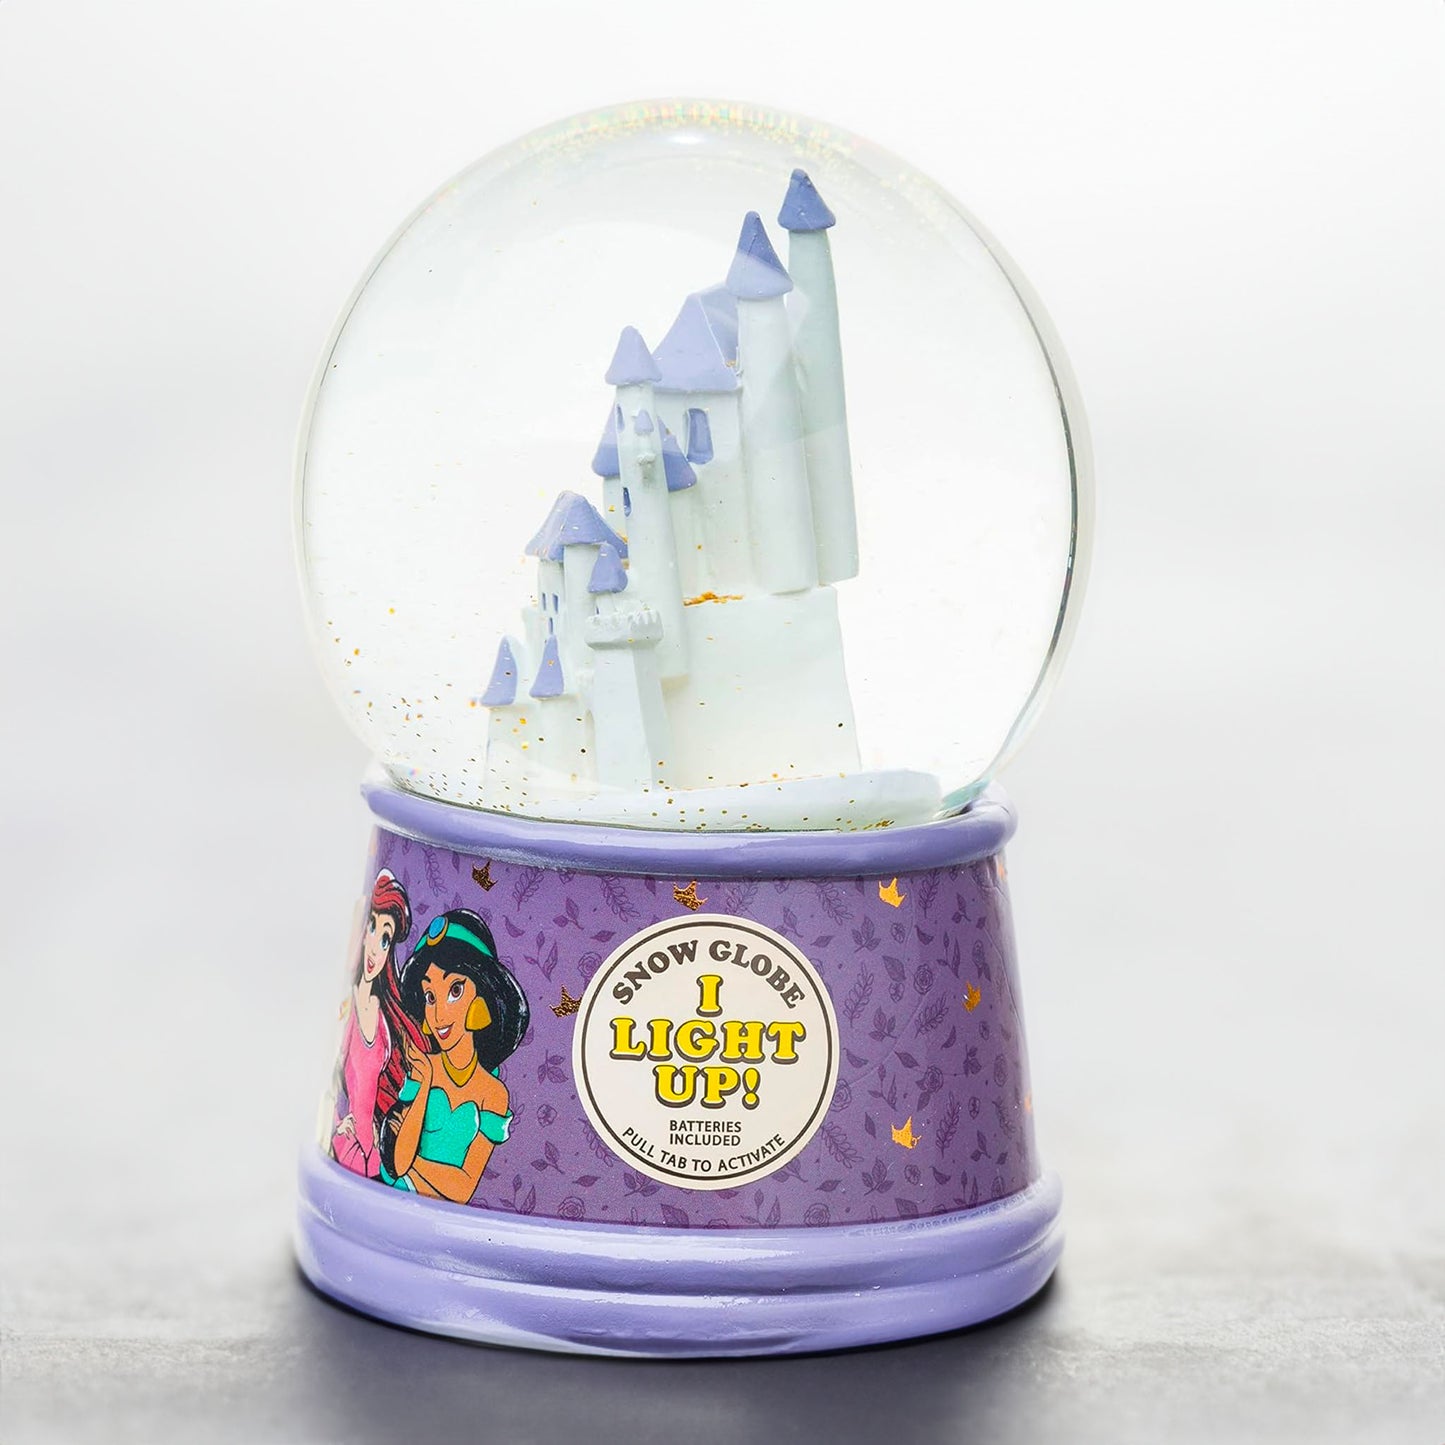 Disney Princess This Princess Saves Herself Decorative Glass Cup Silver Buffalo